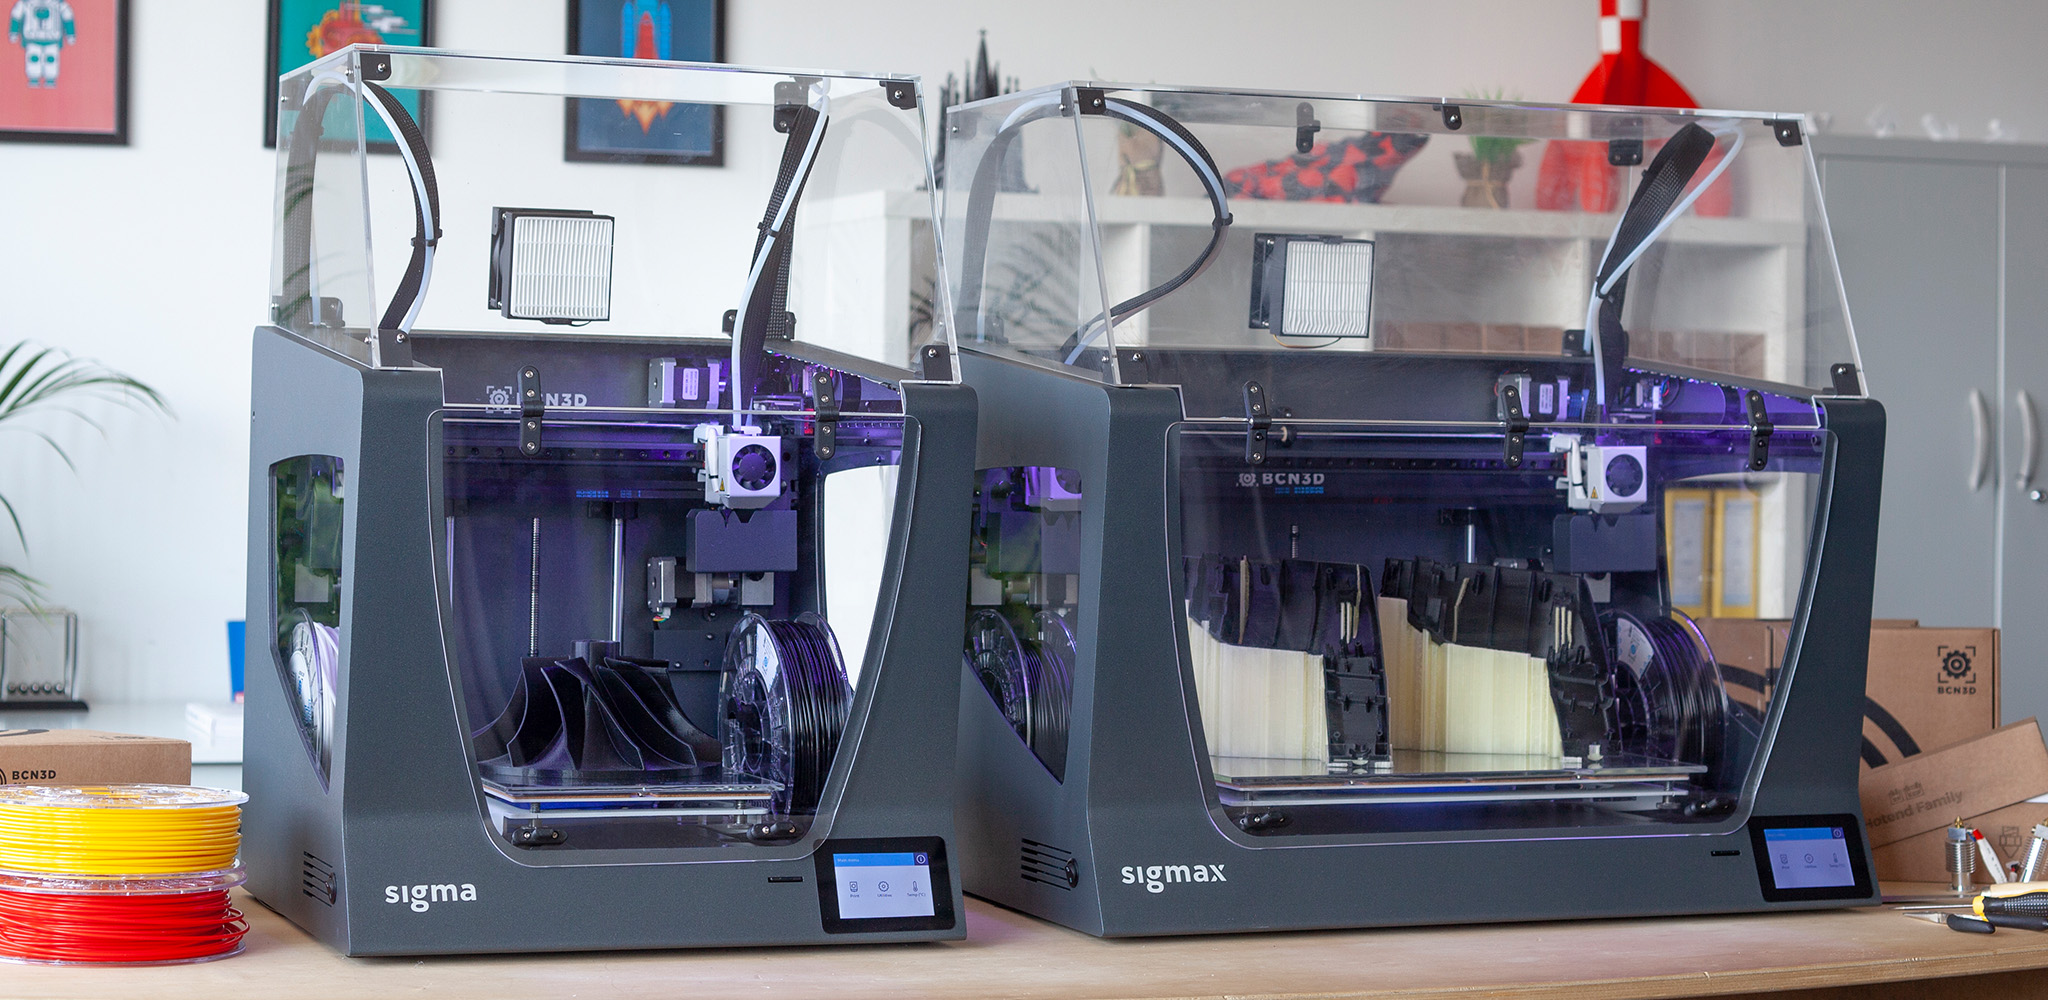 The Sigma and Sigmax R19 3D printers. Photo via BCN3D Technologies.